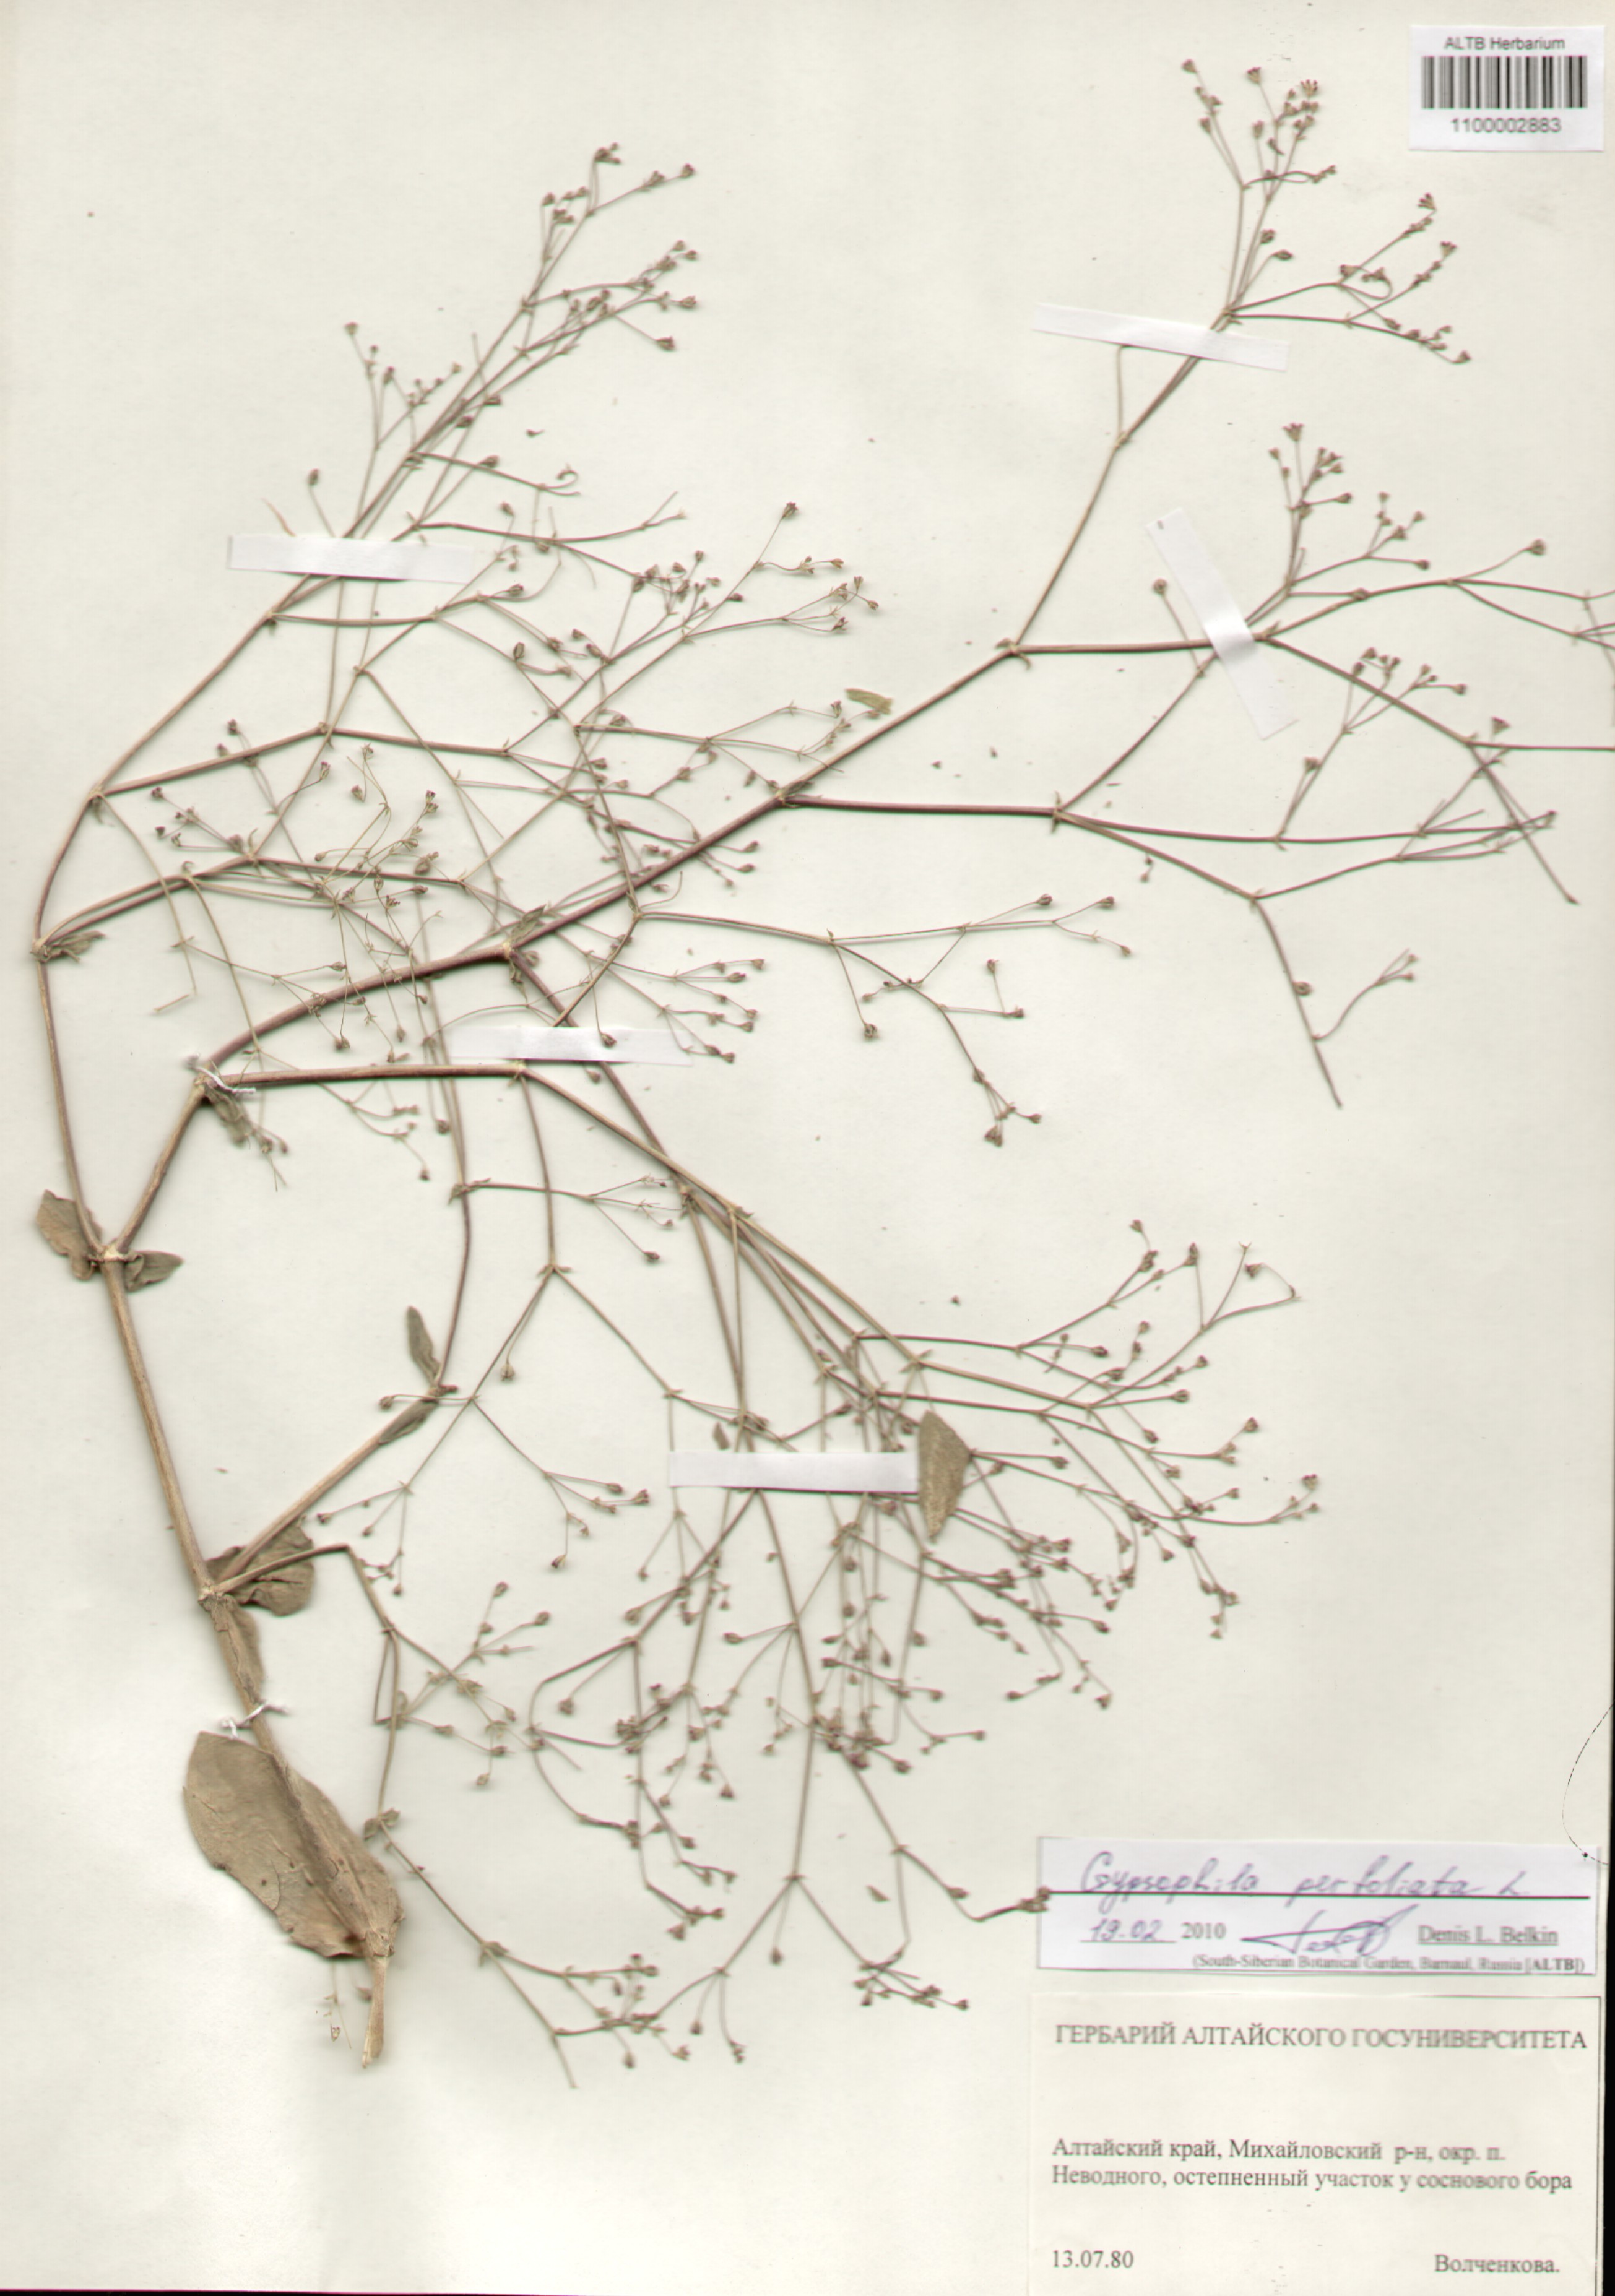 Caryophyllaceae,Gypsophila perfoliata L.